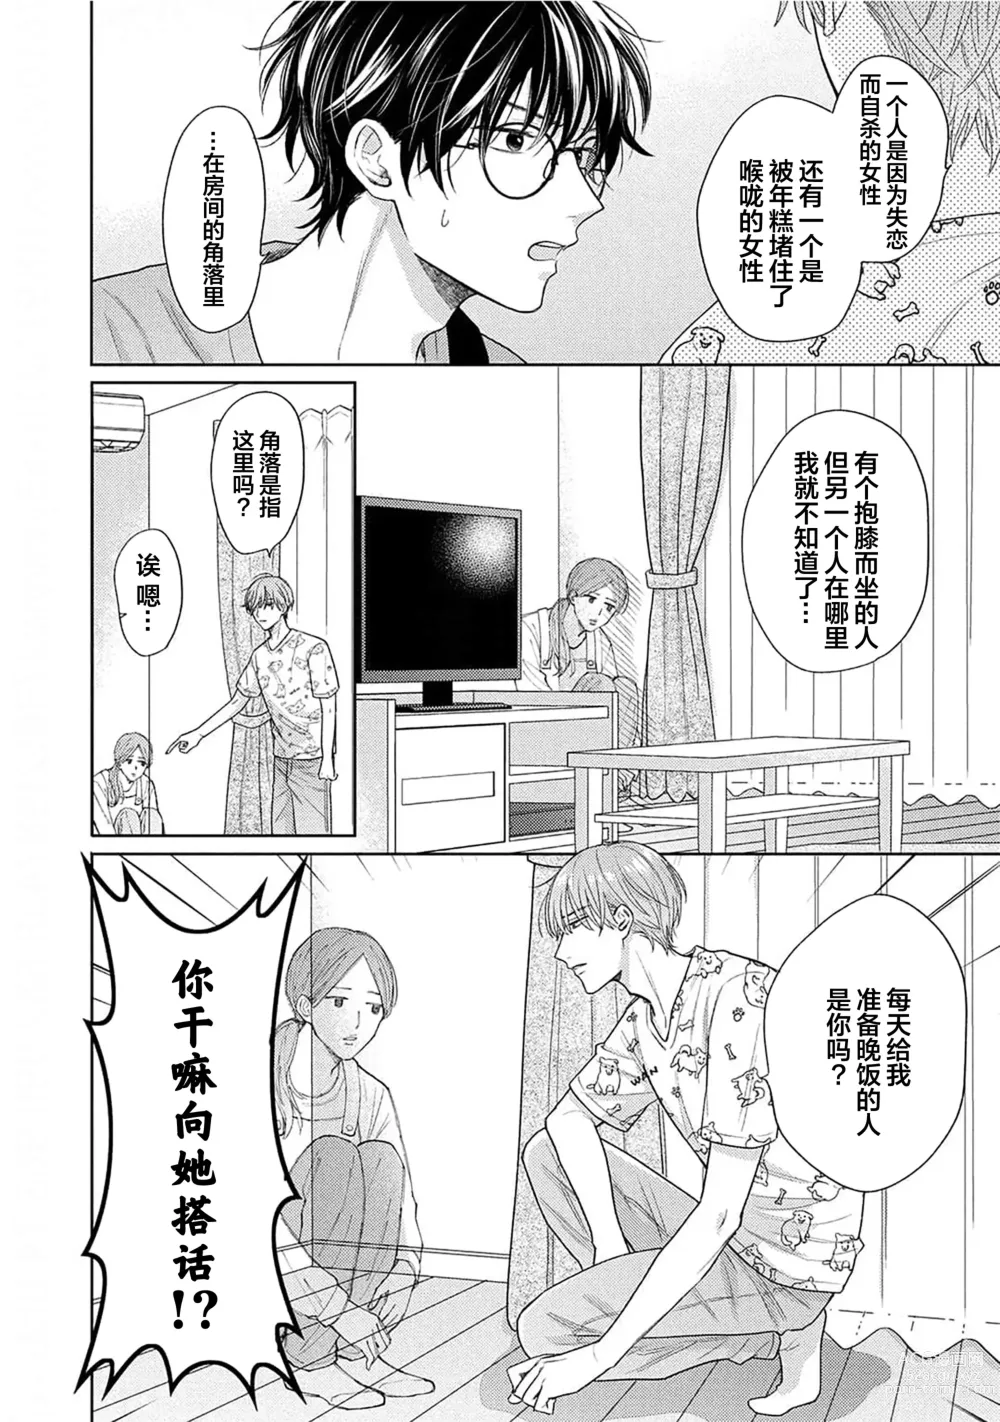 Page 19 of manga 这真的是恋爱吗?